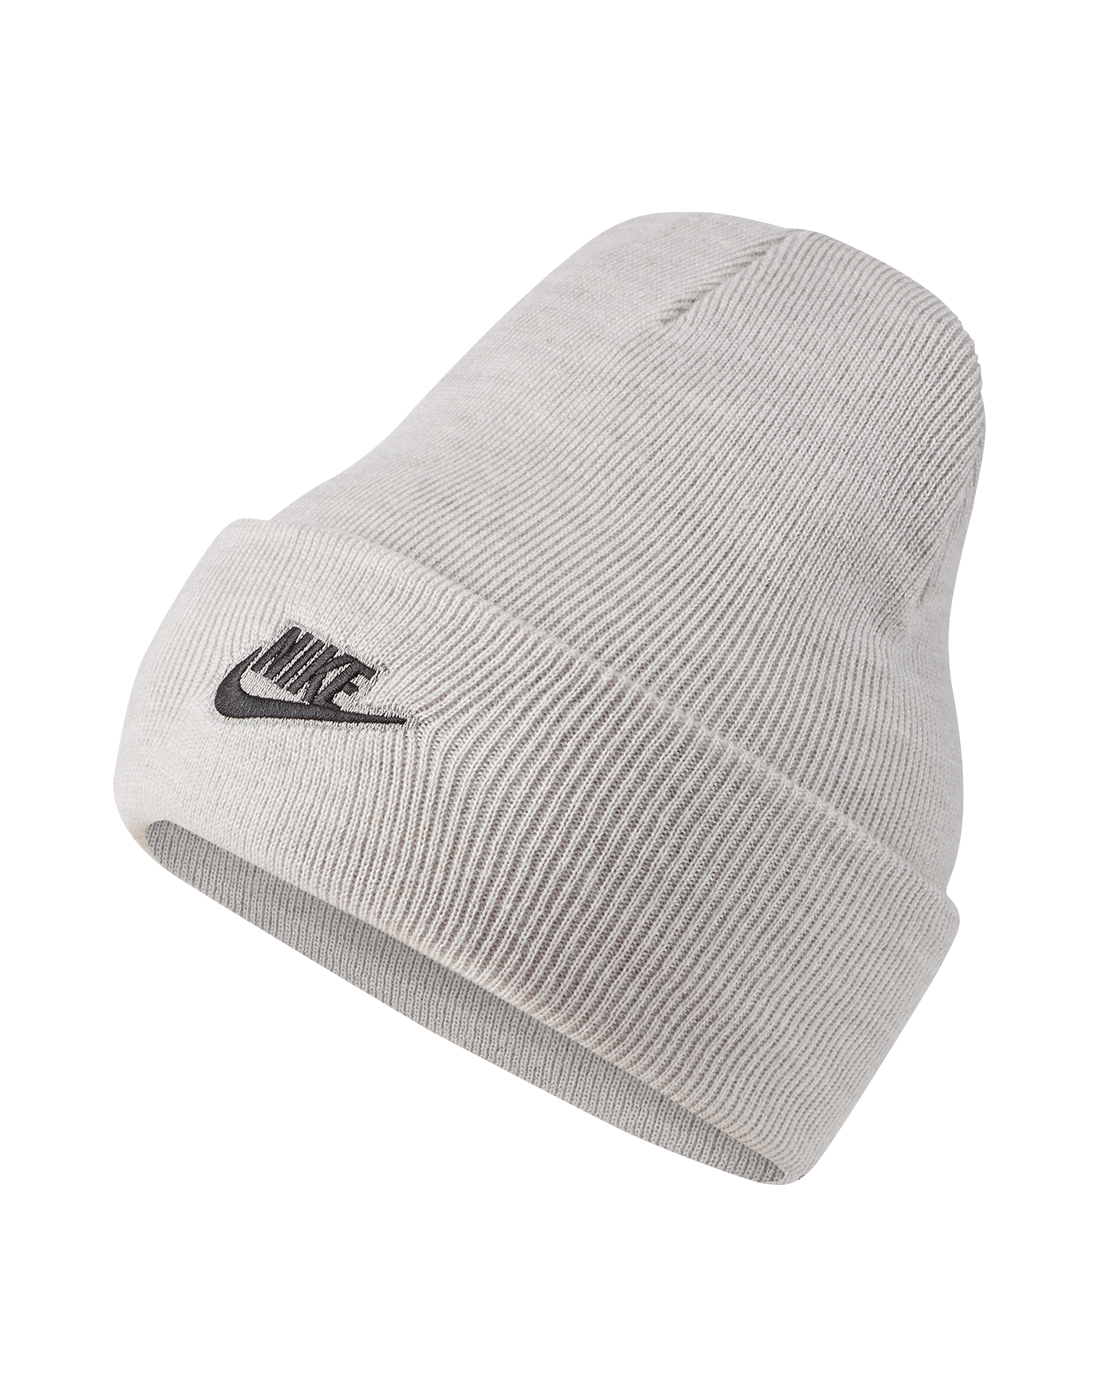 Nike Utility Woolly Hat - Grey | Life Style Sports EU